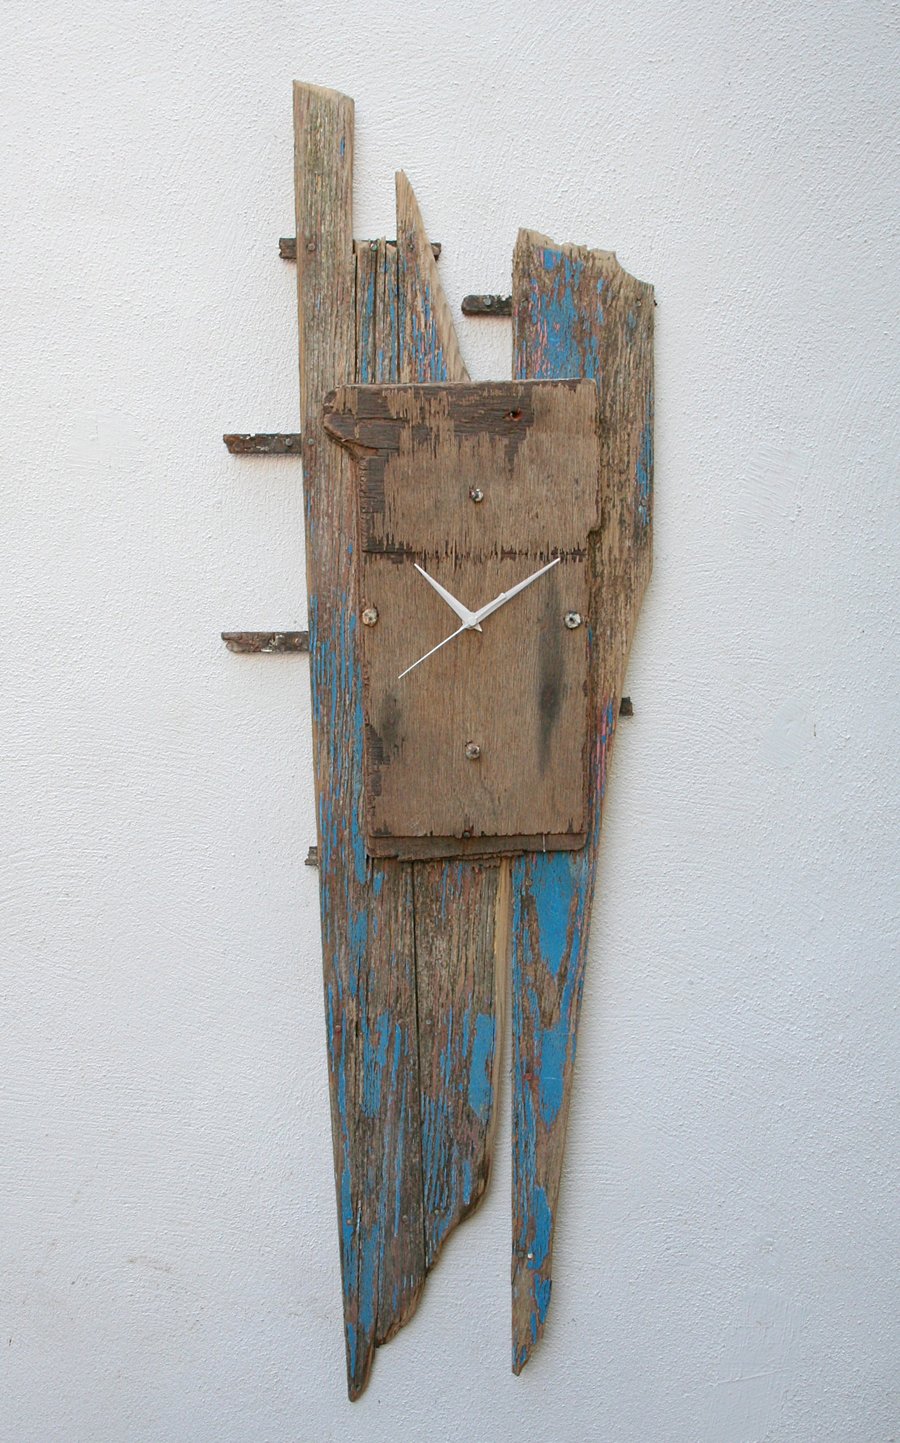 Driftwood Clock,Fishing Boat Driftwood Clock,Drift Wood Clock, Beach finds Clock